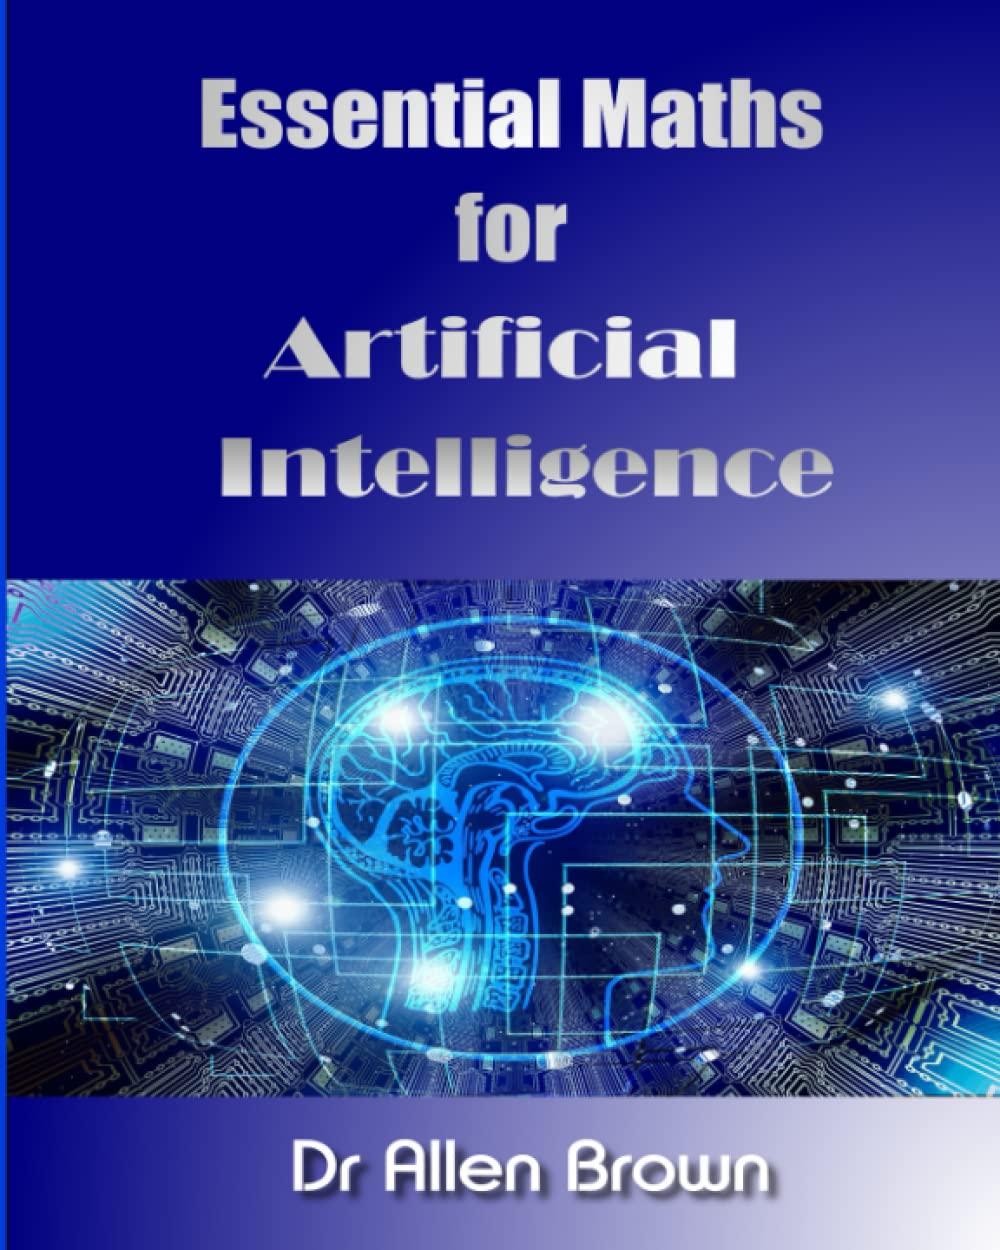 essential maths for artificial intelligence 1st edition dr allen brown b0b7qdgn8w, 979-8556585850